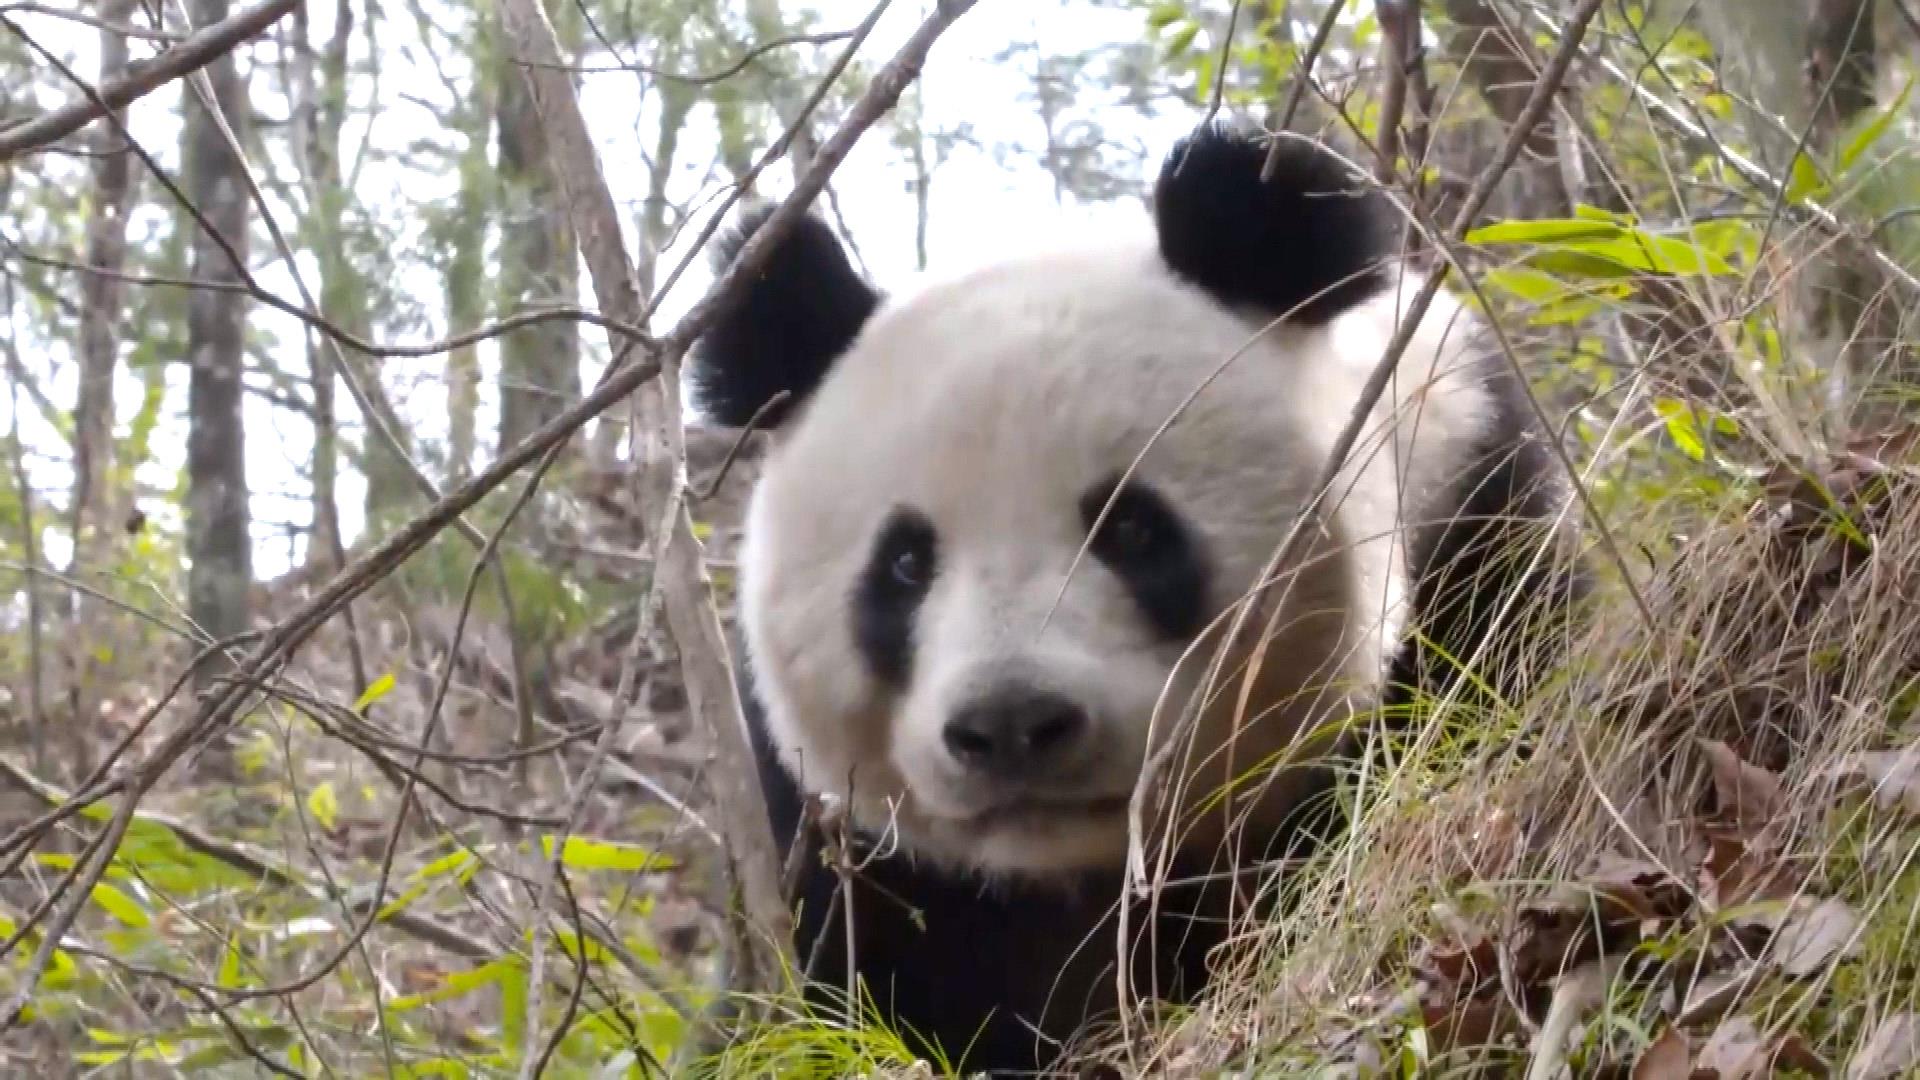 Rare video captures giant panda, cub in wild - AOL News